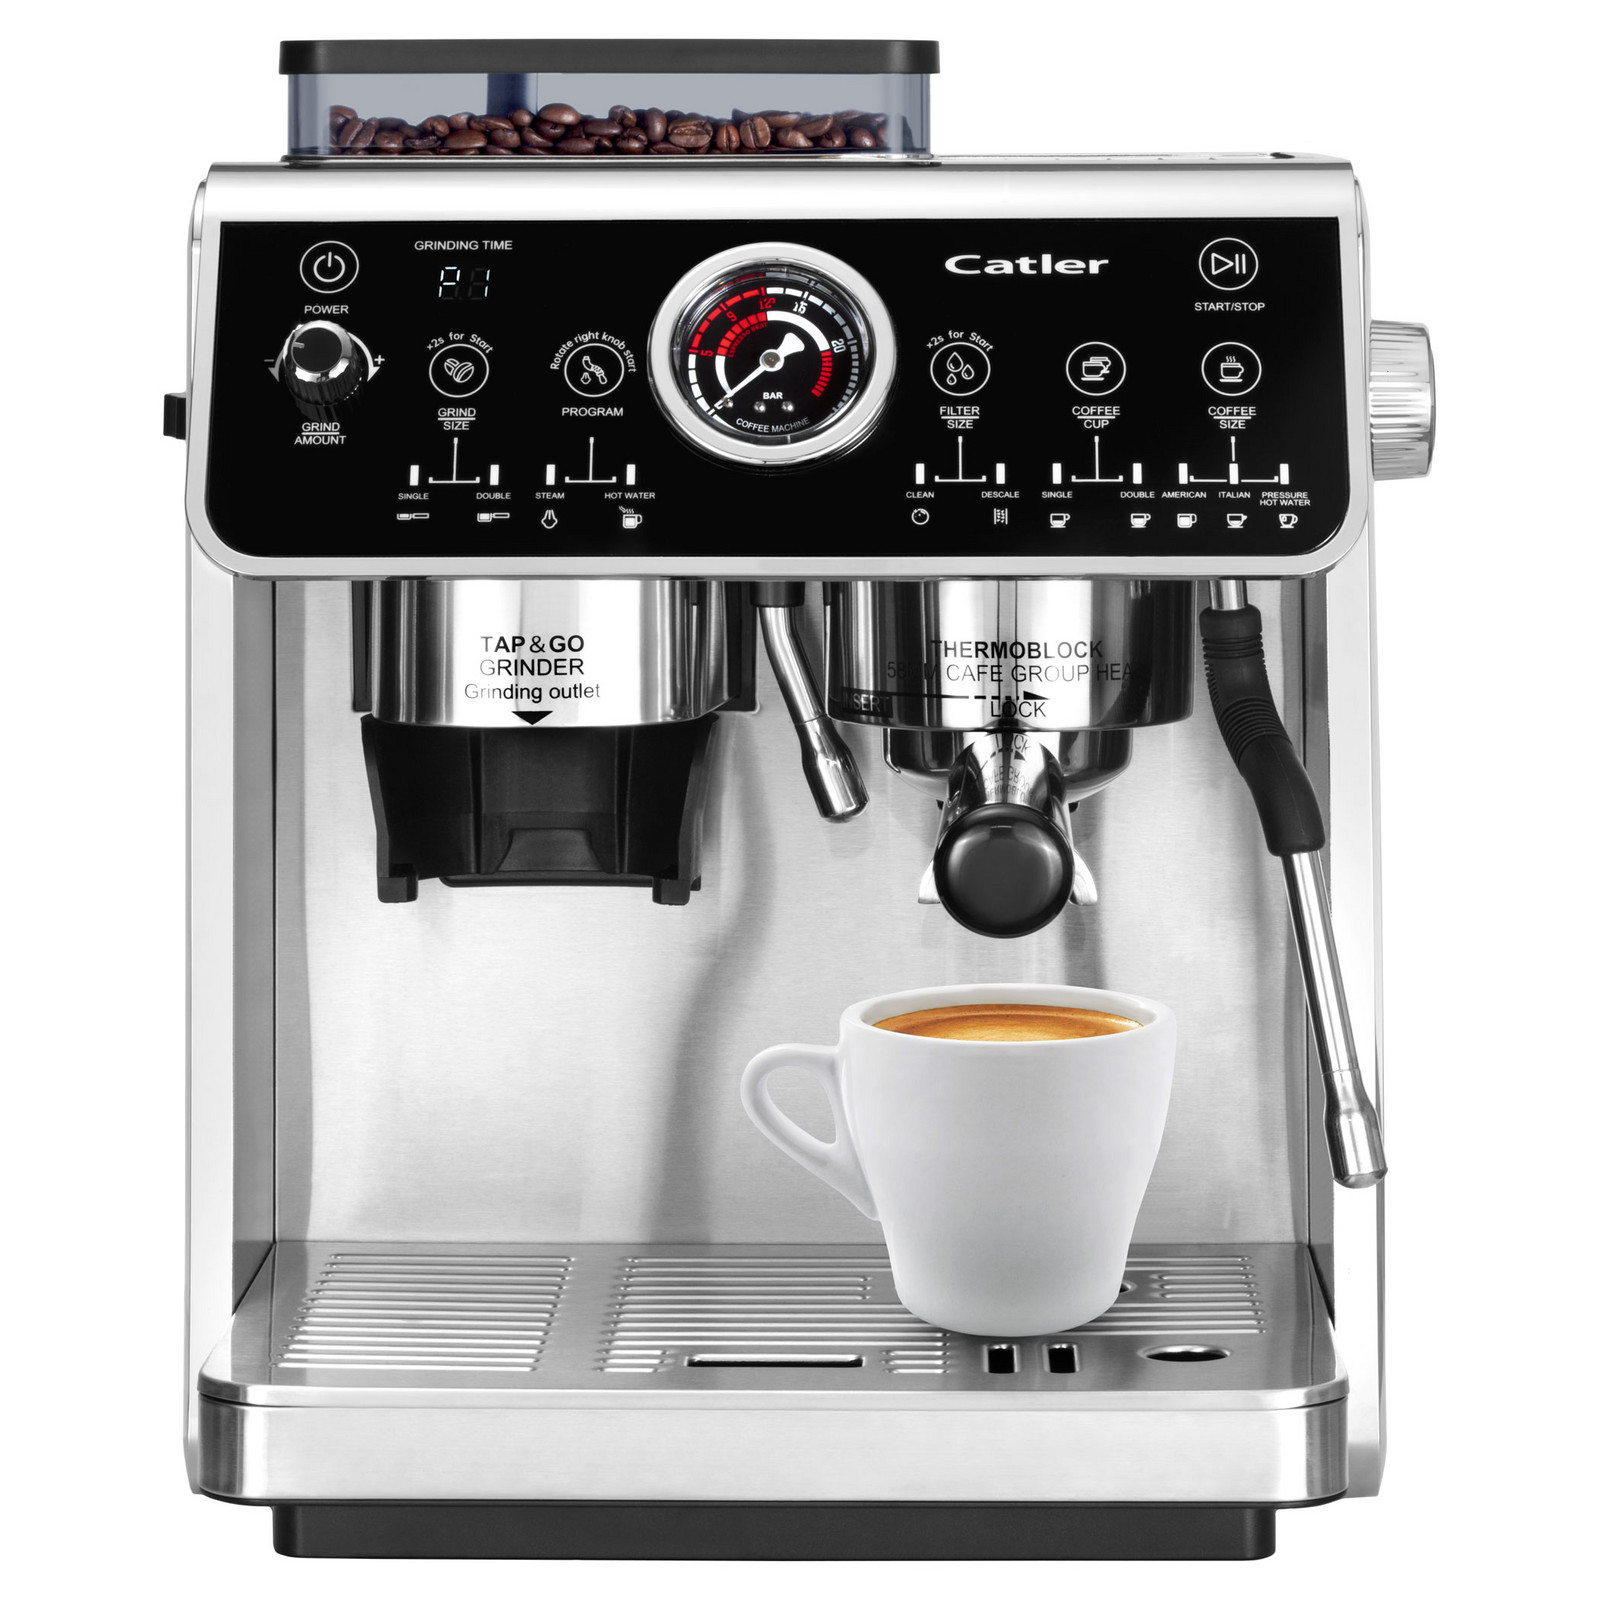 Catler Es 910 Espresso maker